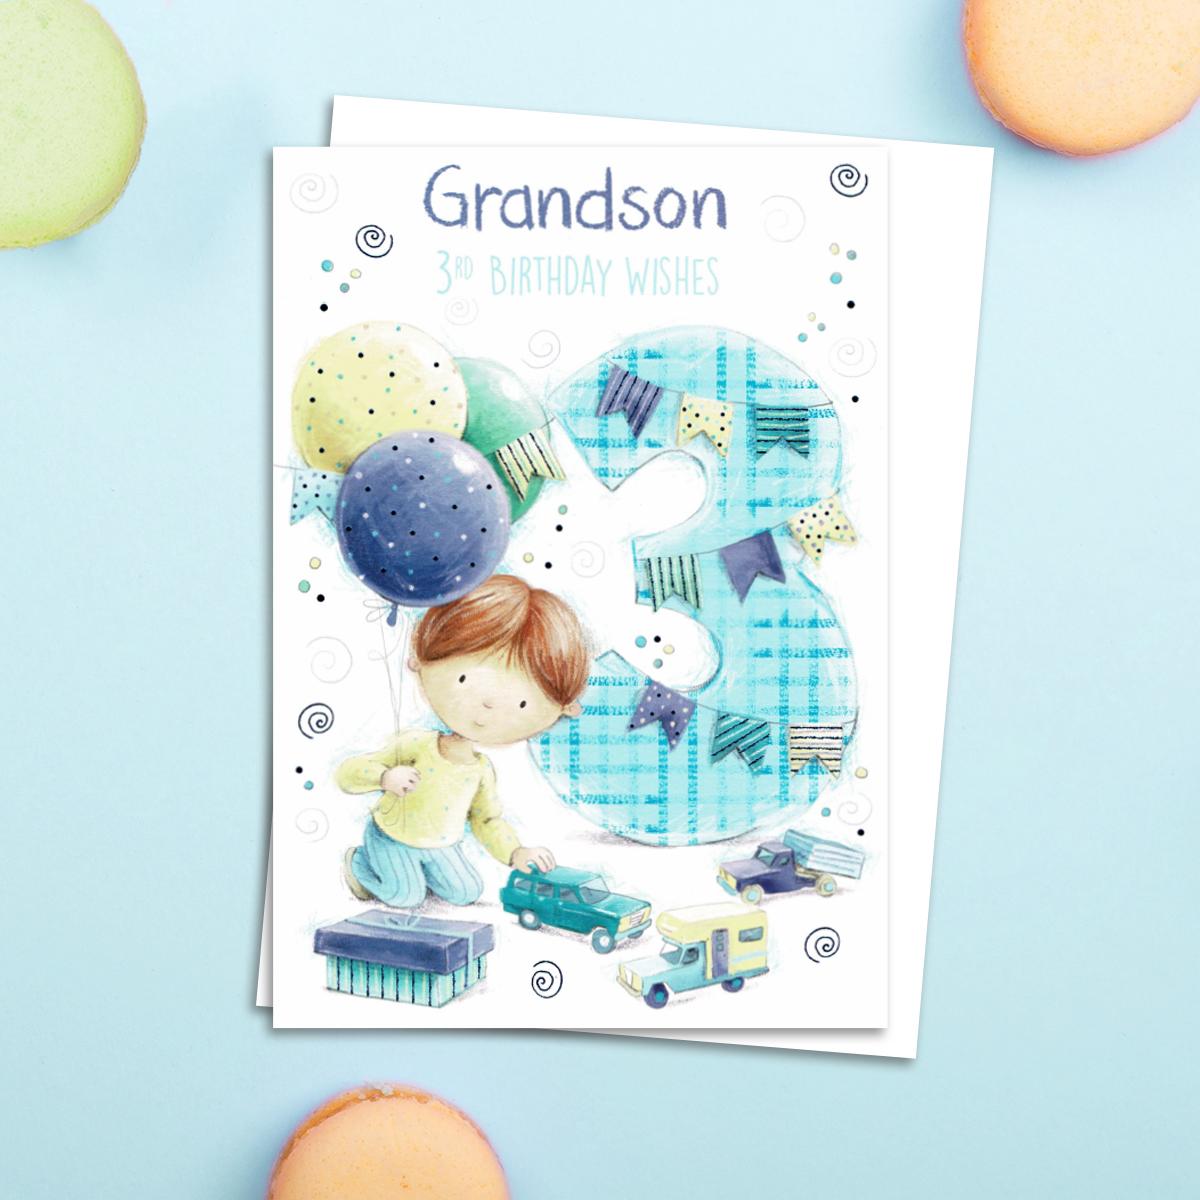 Greetings Card Birthday Card GRANDSON 3rd  BIRTHDAY AGE Relations 